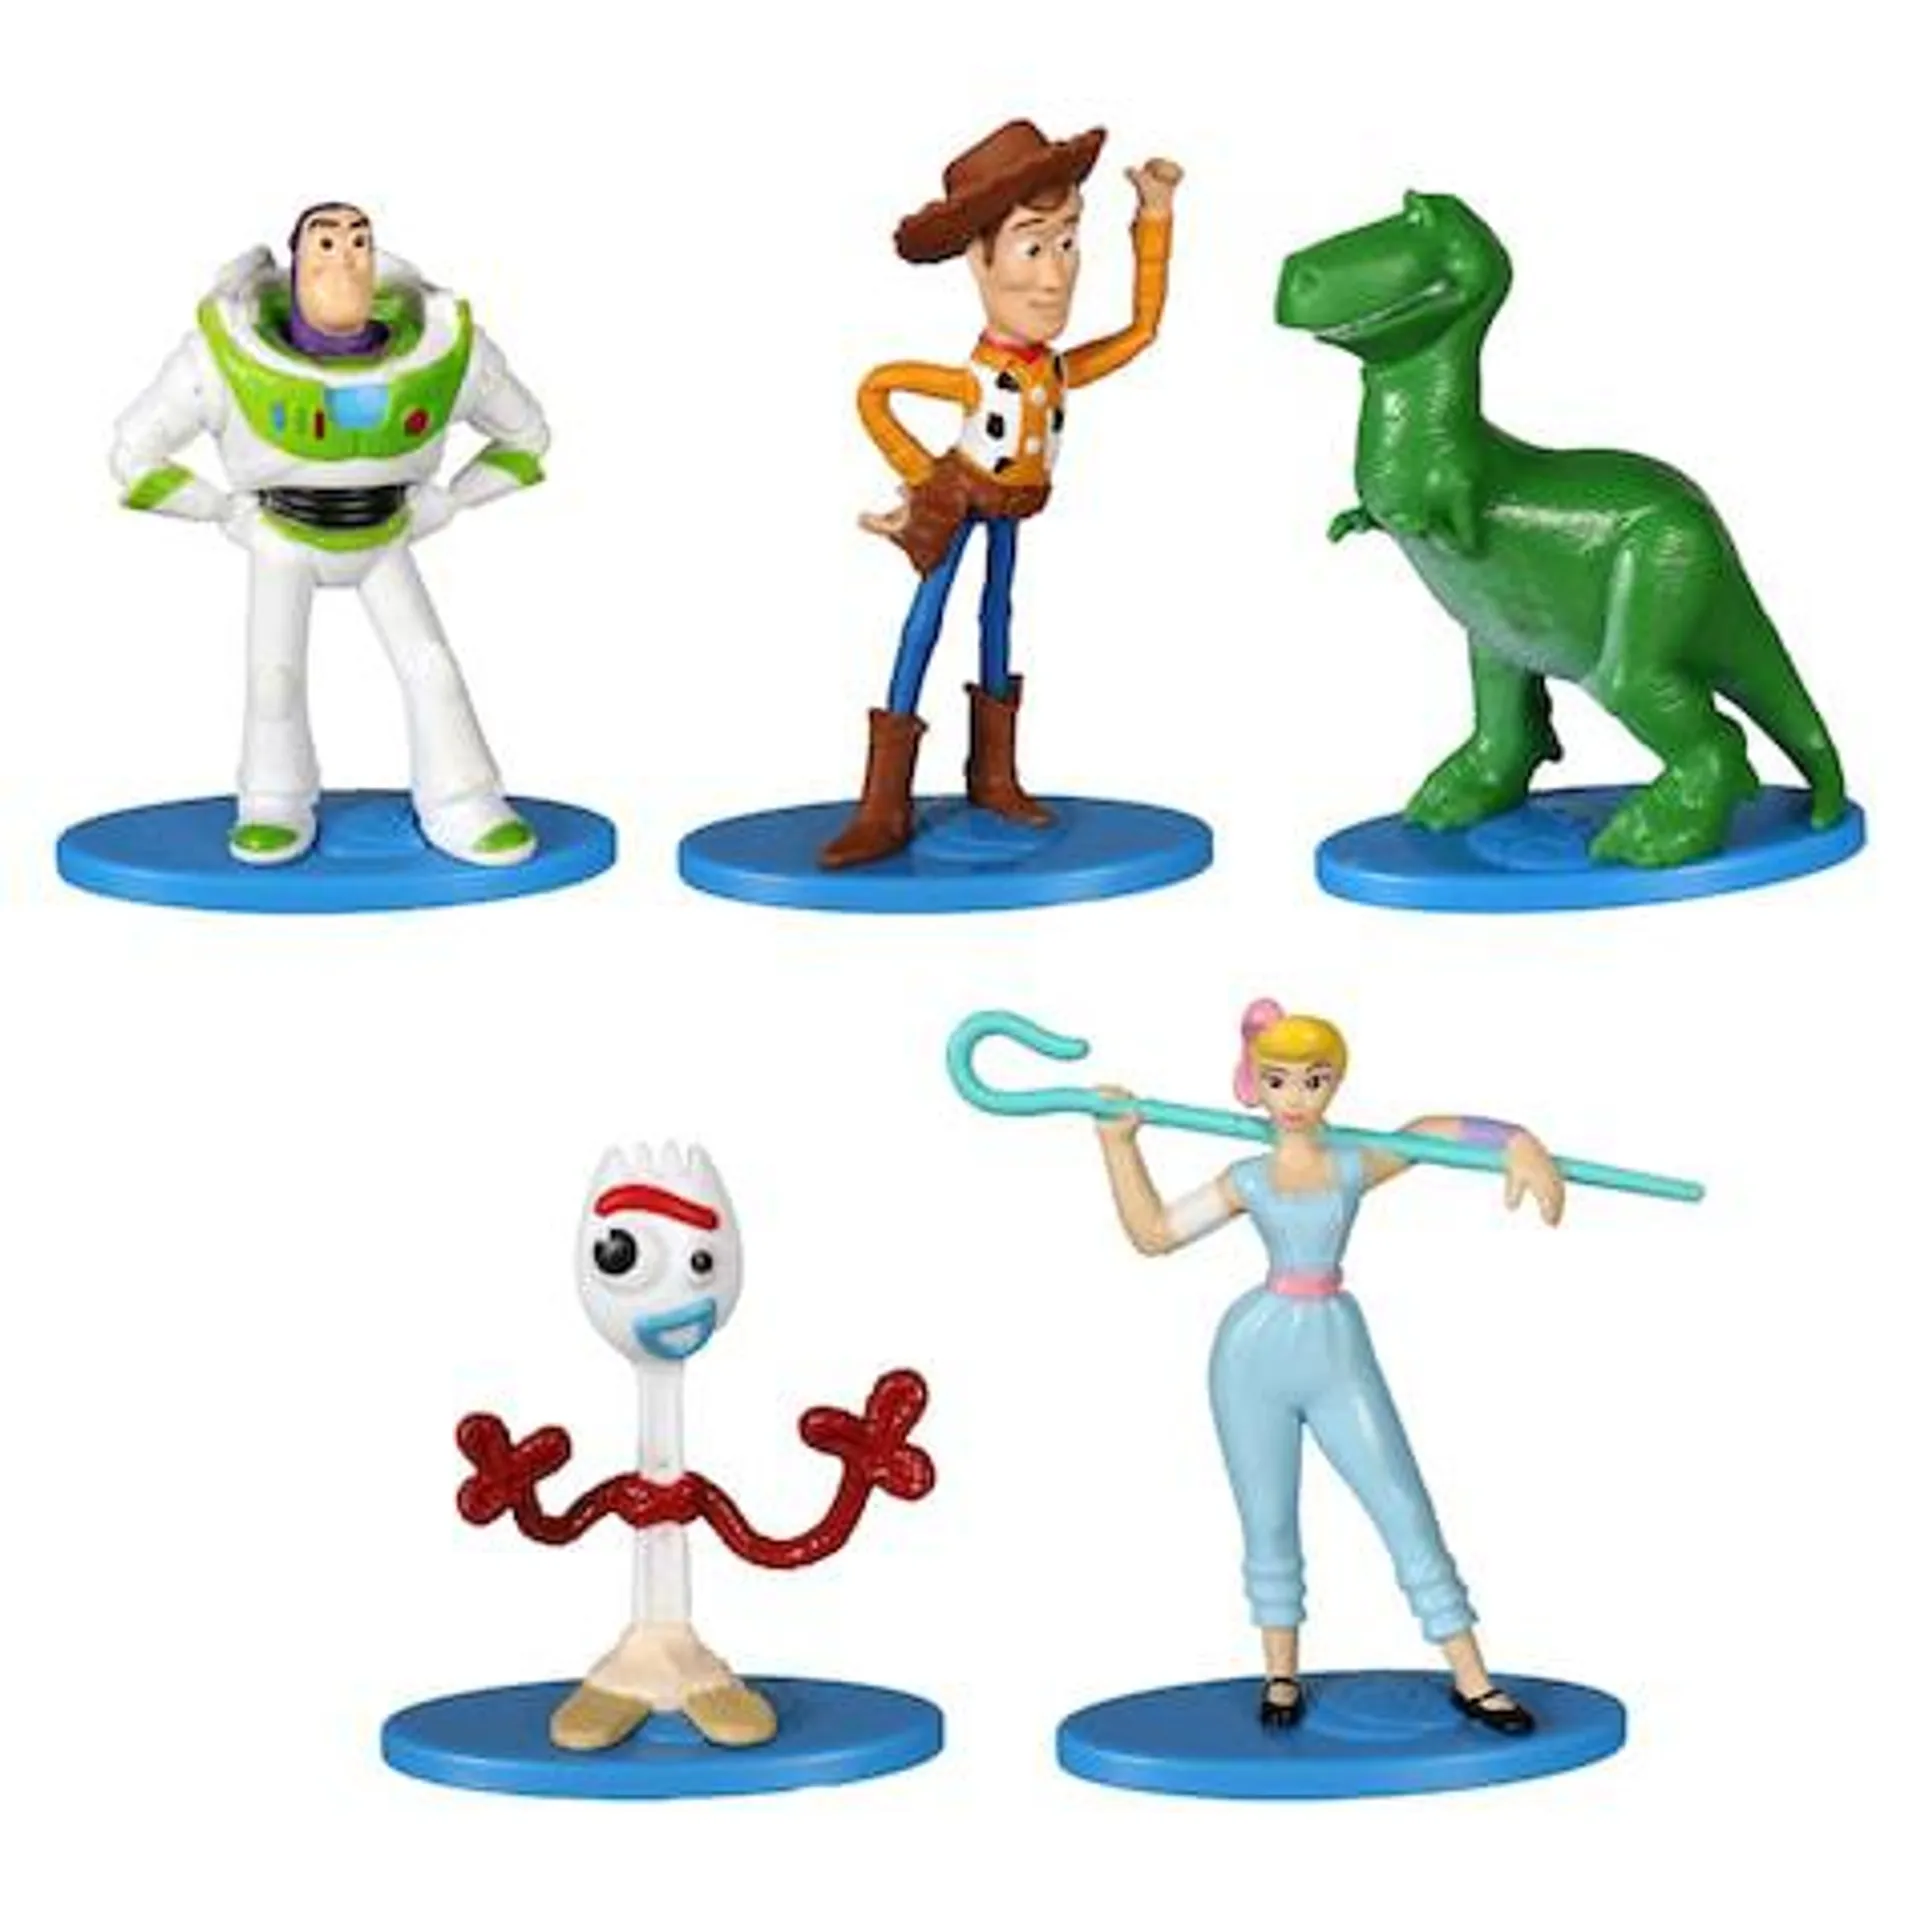 Disney-Pixar Toy Story 4 Mini Figurines 3.5x1.125x4.5-in.